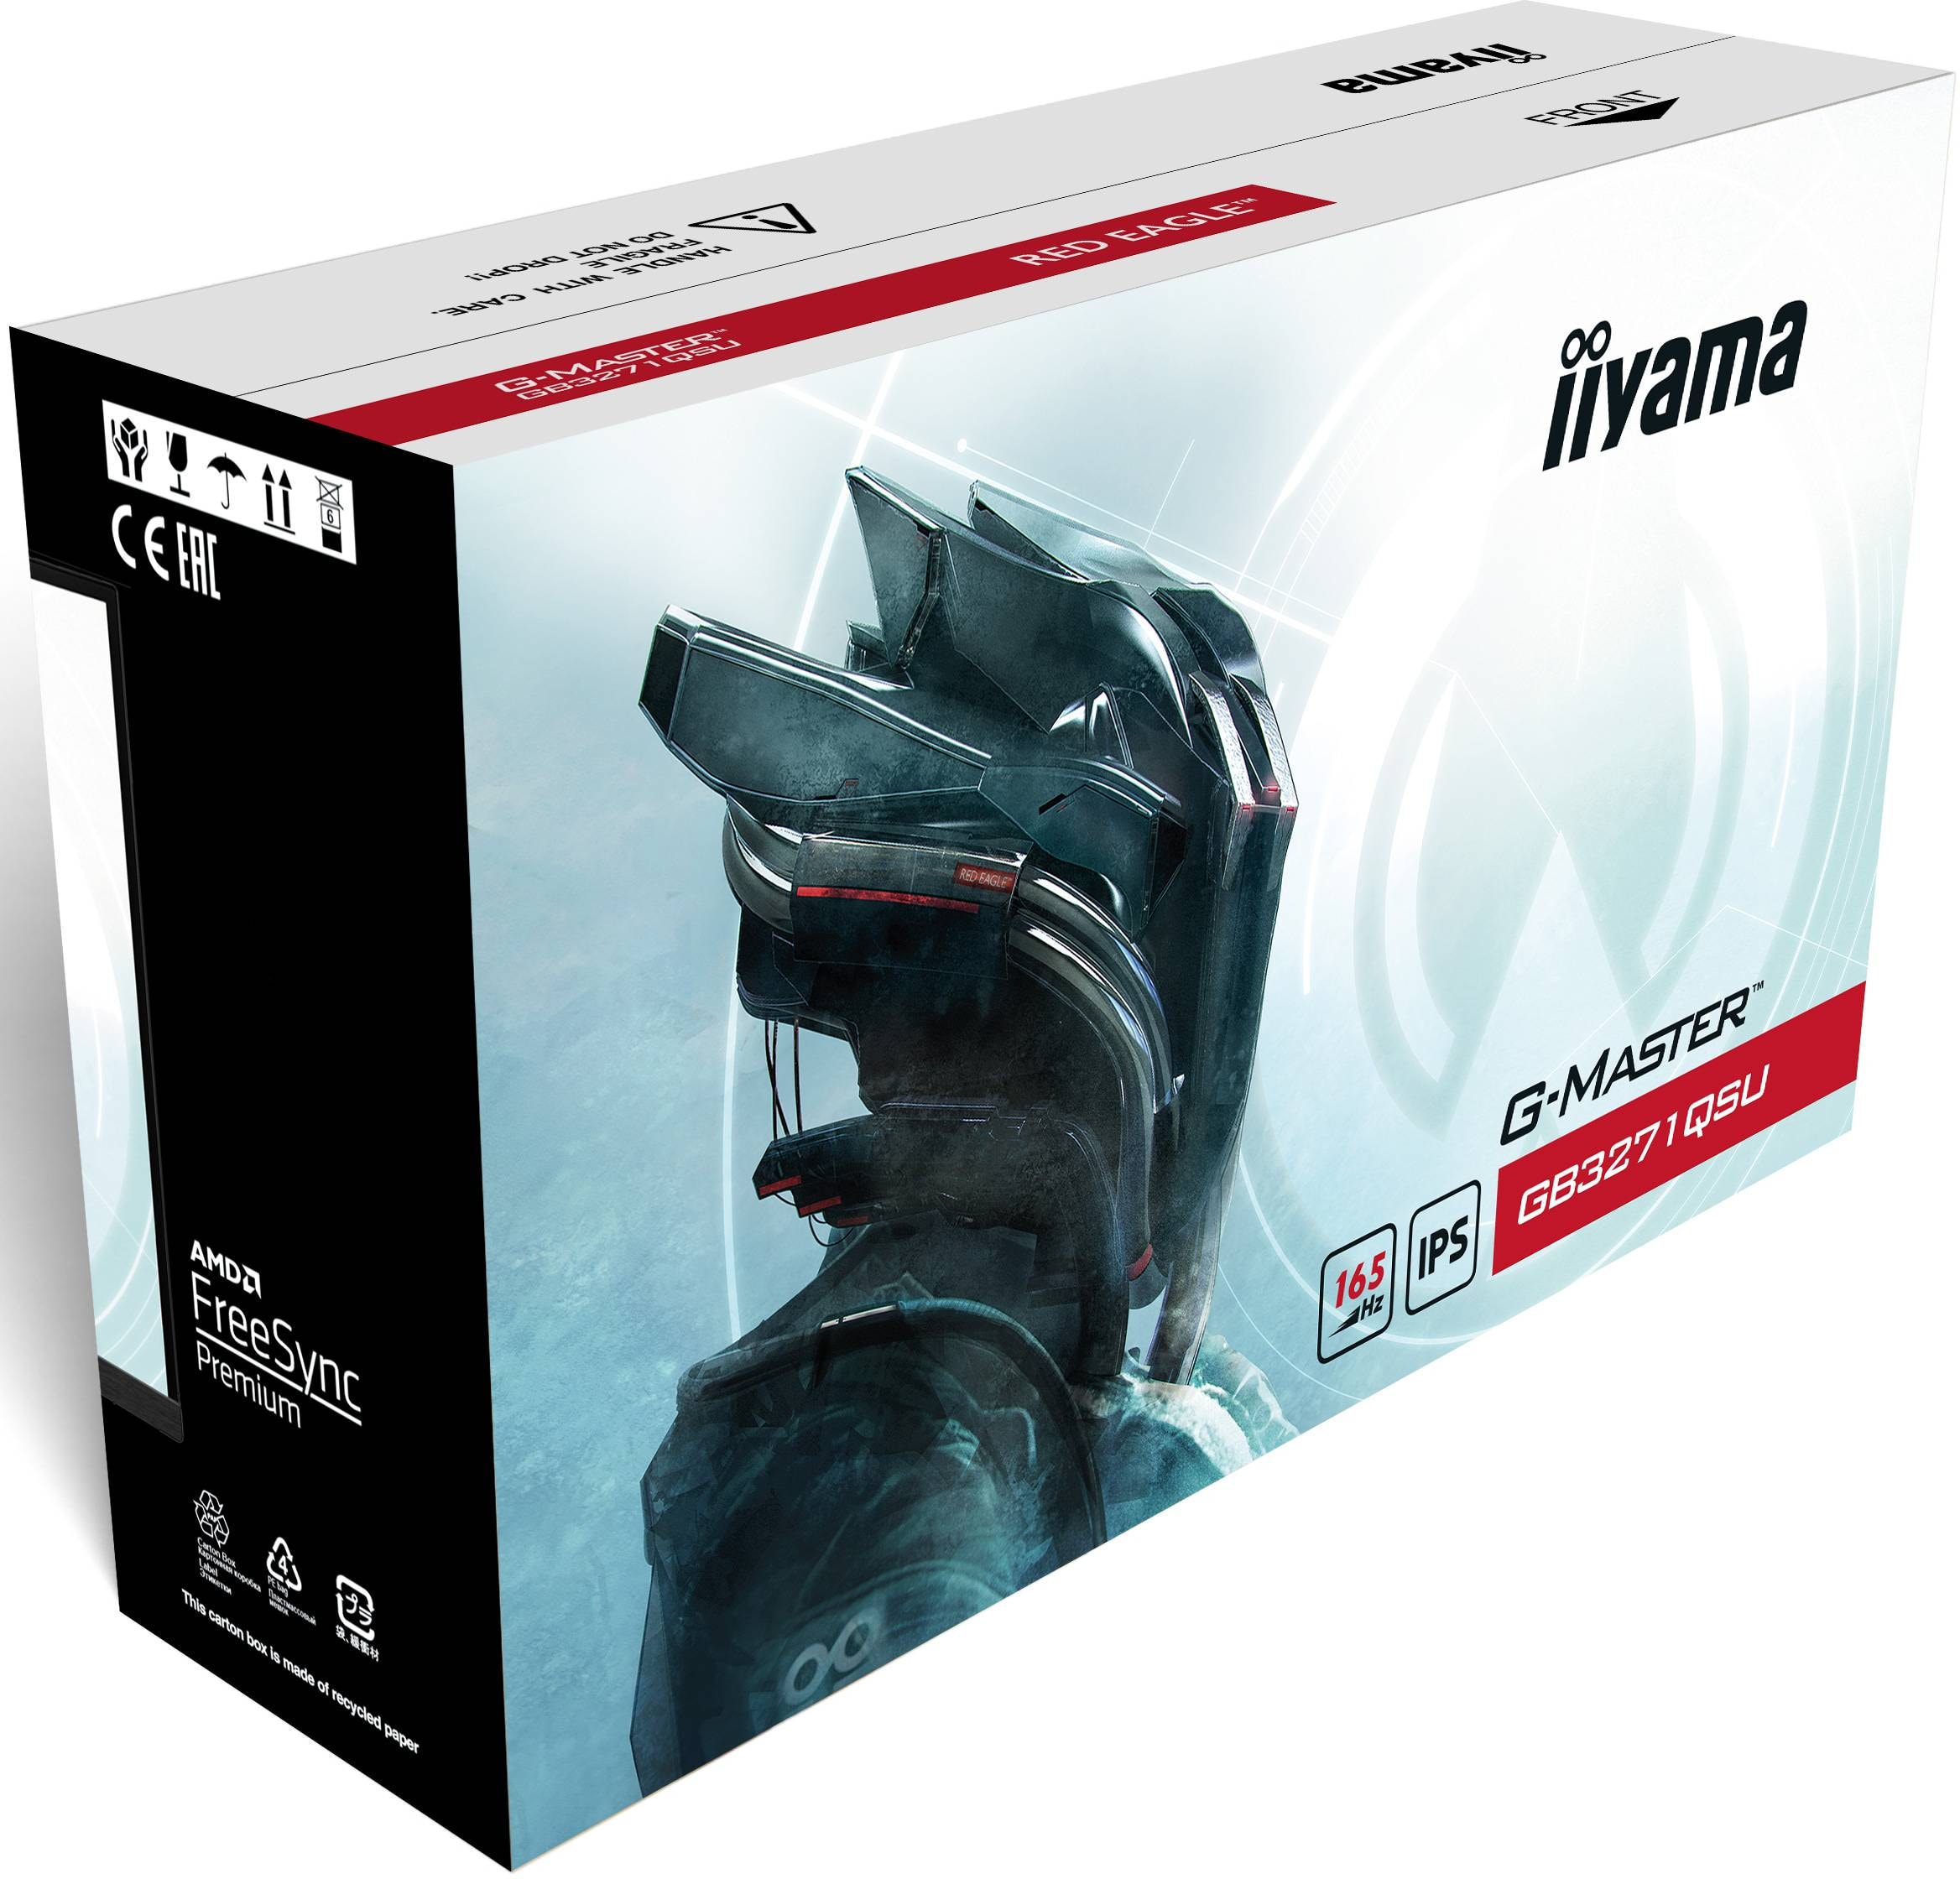 IIYAMA Ecran PC Gamer 32 pouces  - GB3271QSU-B1